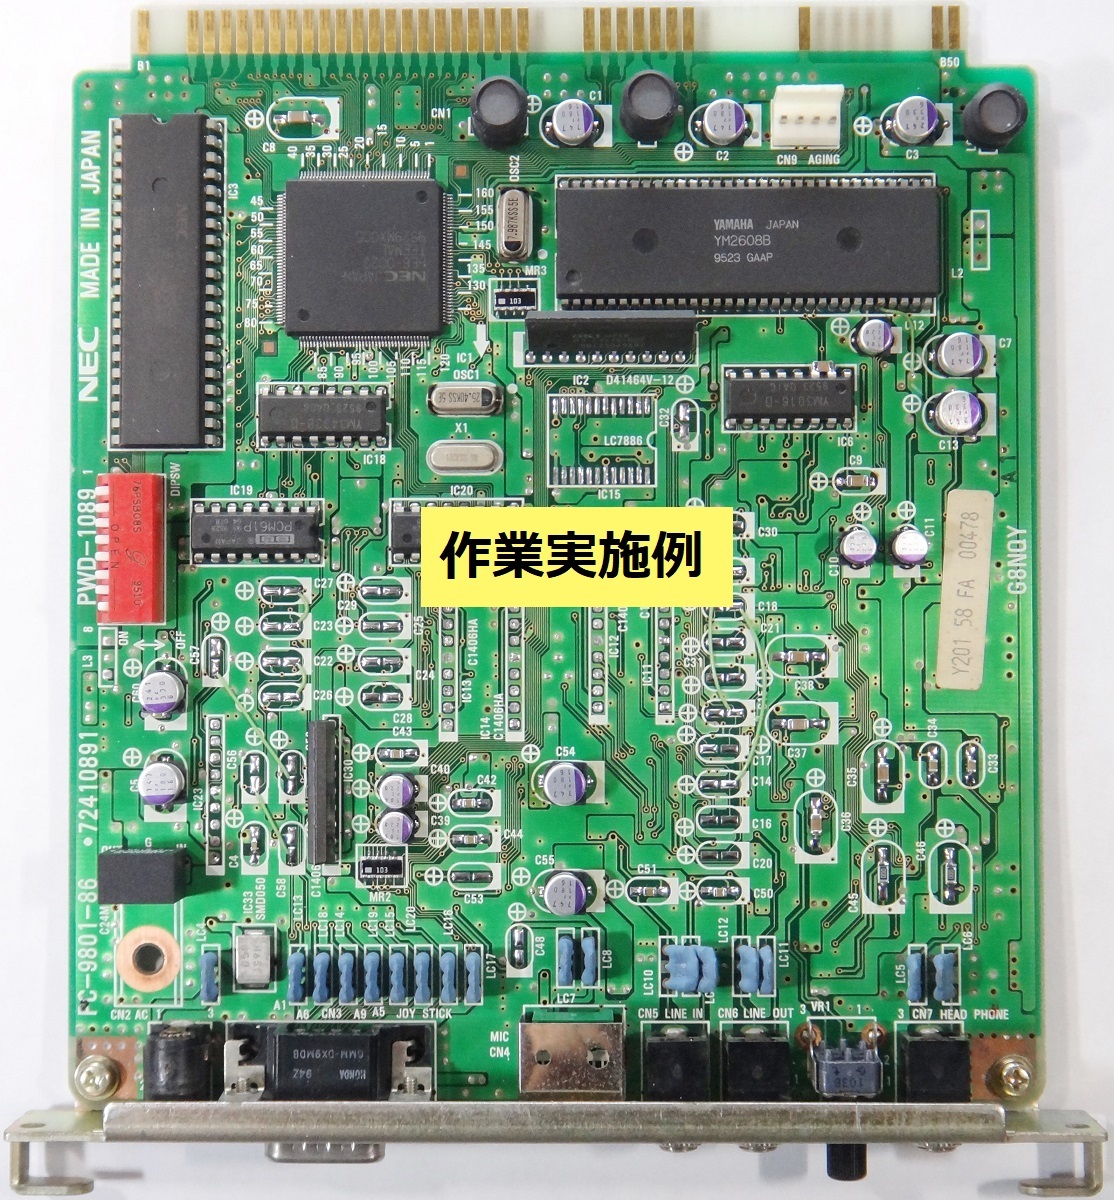 PC-9801-86 (OPNA:① 92xx, 93xx) 【再生専用化】高音質化改造V2の請負作業 (返送料込)_PC-9801-86 高音質化改造V2 作業の出品です